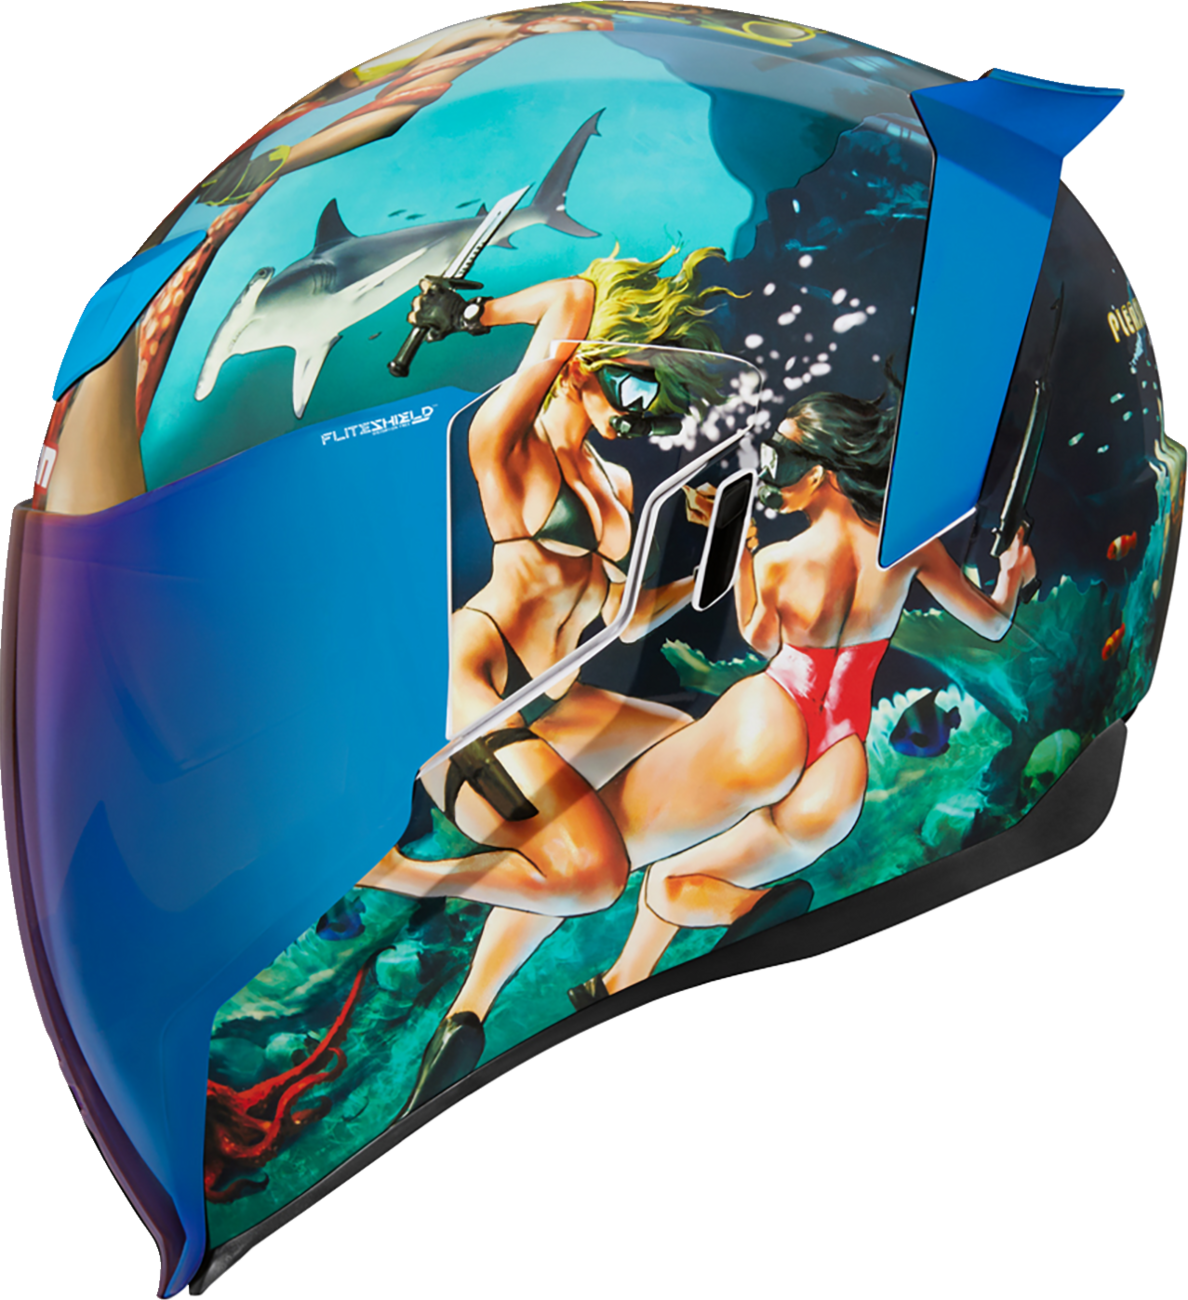 ICON Airflite™ Helmet - Pleasuredome4 - Blue - 2XL 0101-15005